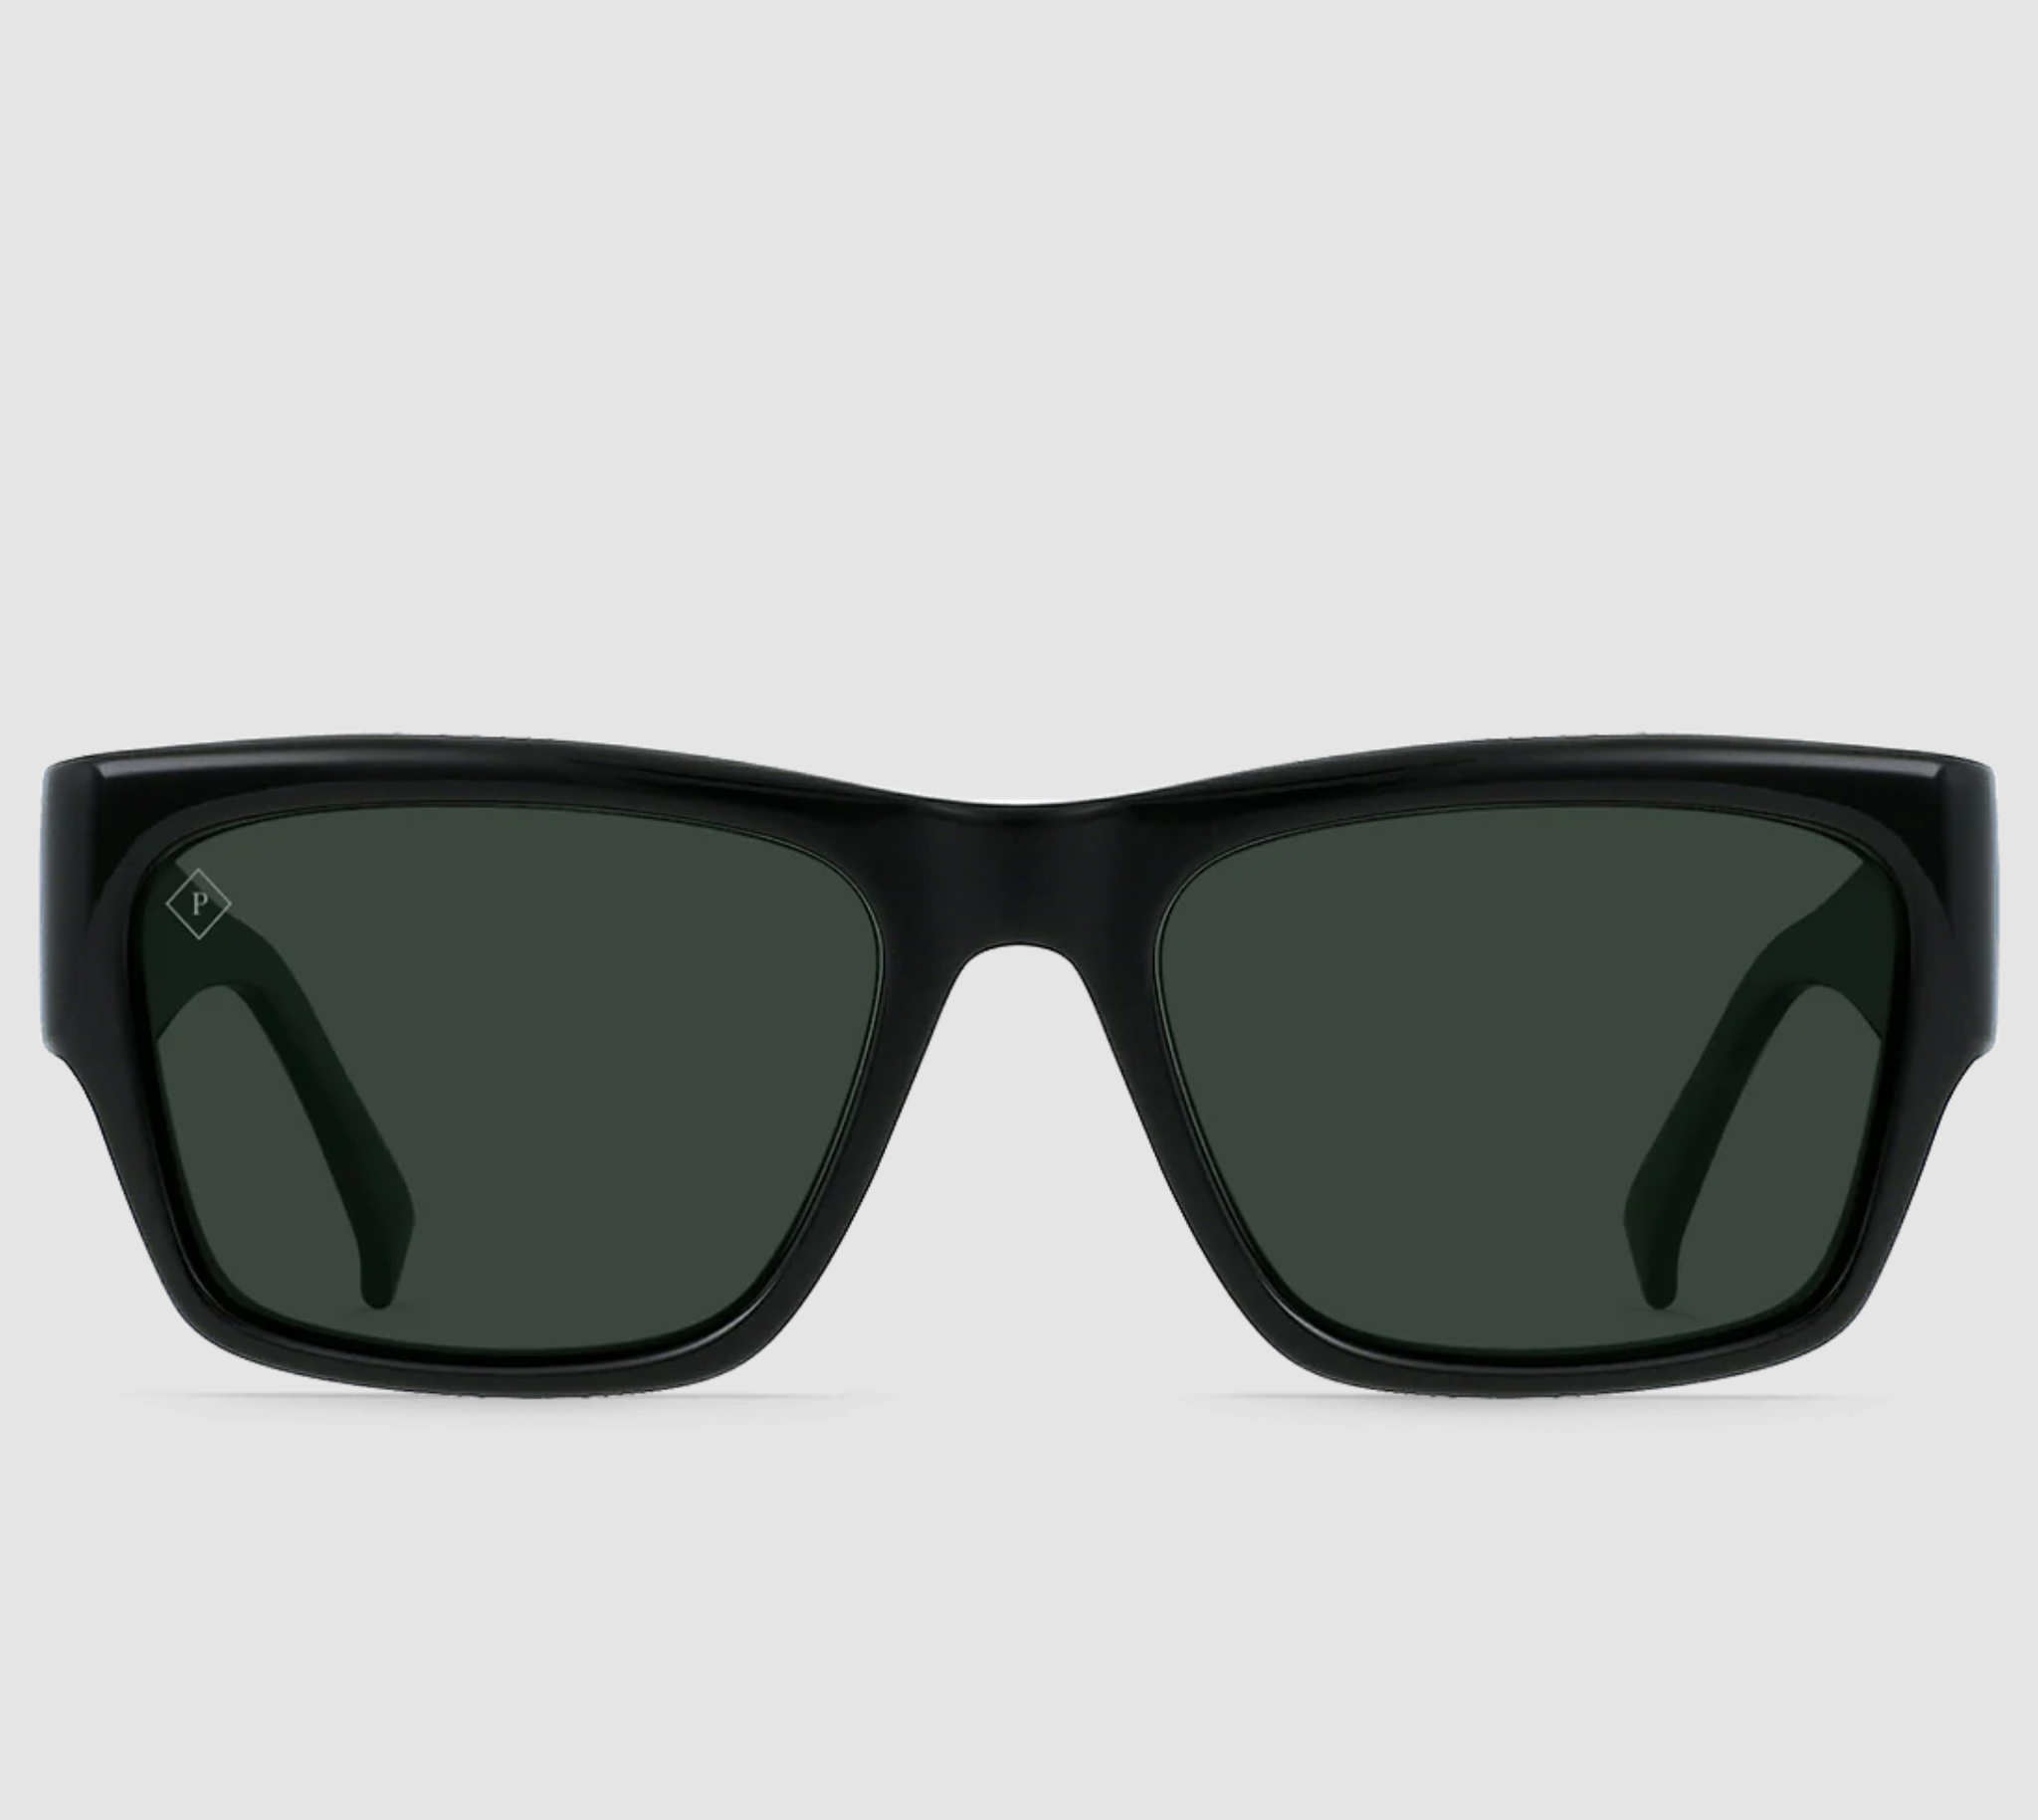 Rufio Sunglasses - Recycled Black/Green Polarized